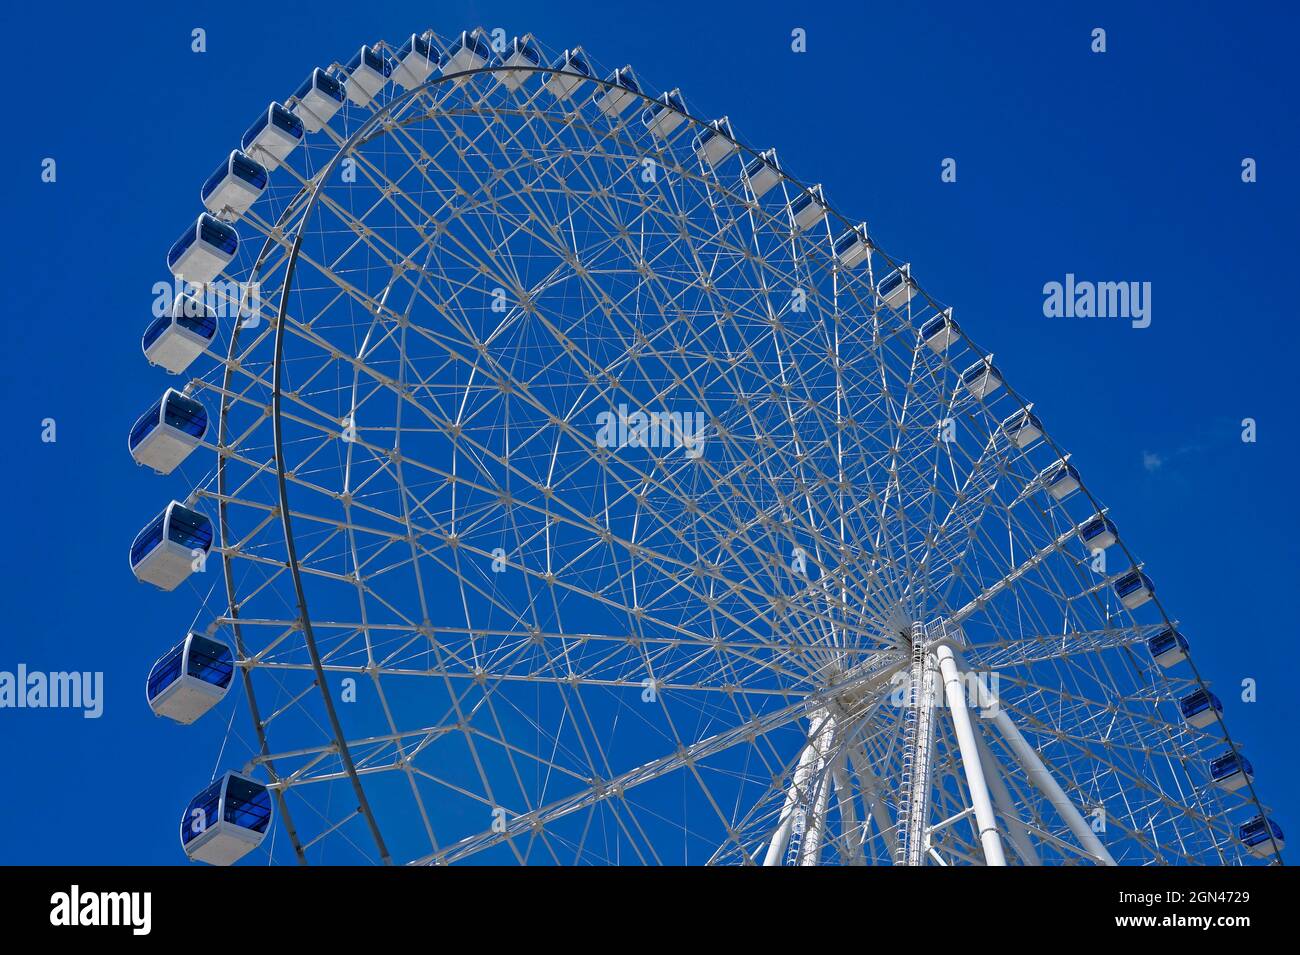 RIO DE JANEIRO, BRAZIL - DECEMBER 30, 2019: Rio Star, ferris wheel at port area Stock Photo